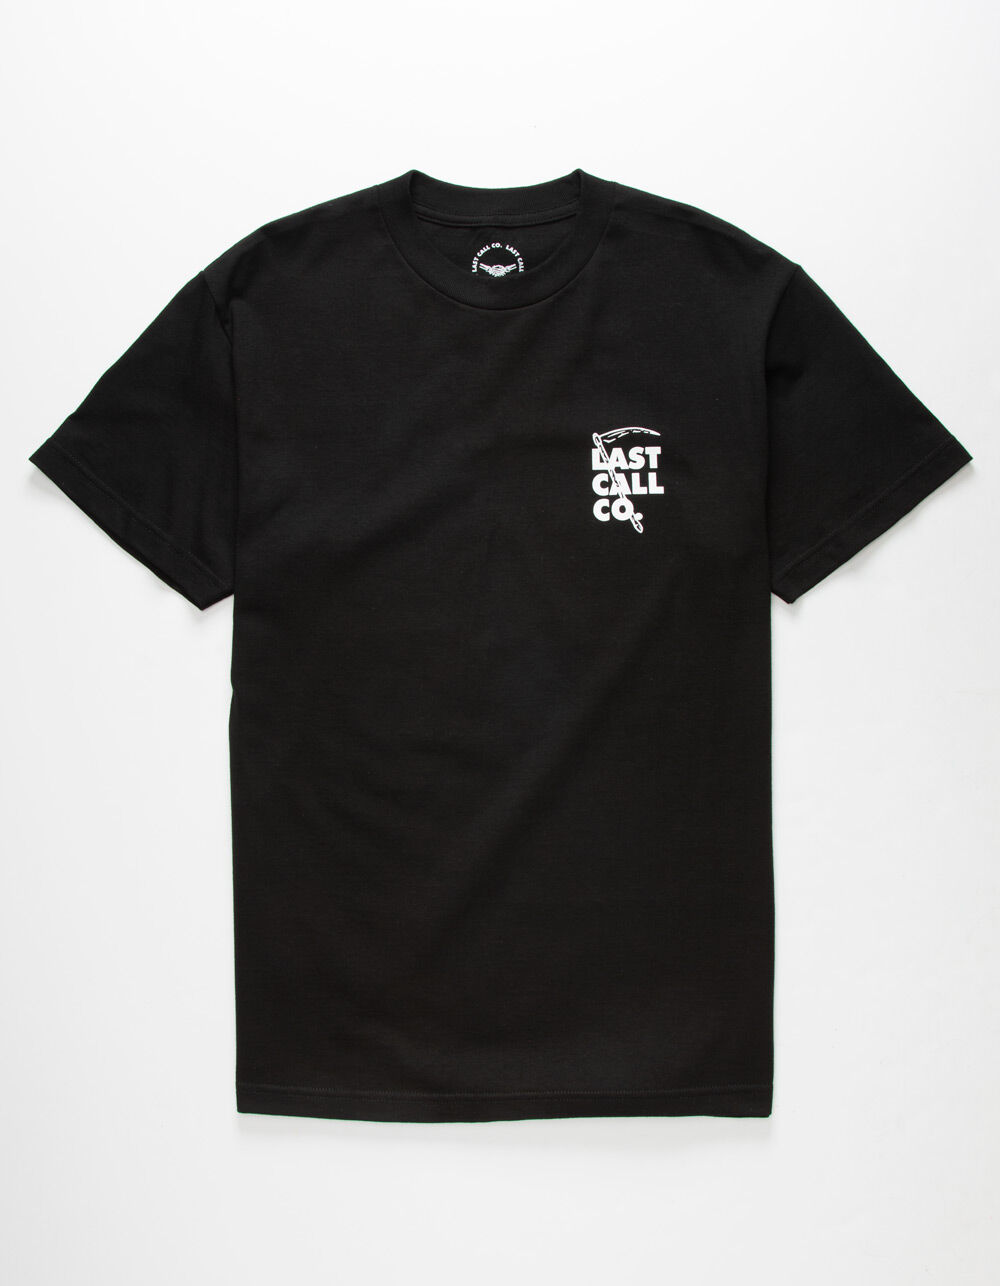 LAST CALL CO. Don't Drink Mens T-Shirt - BLACK | Tillys